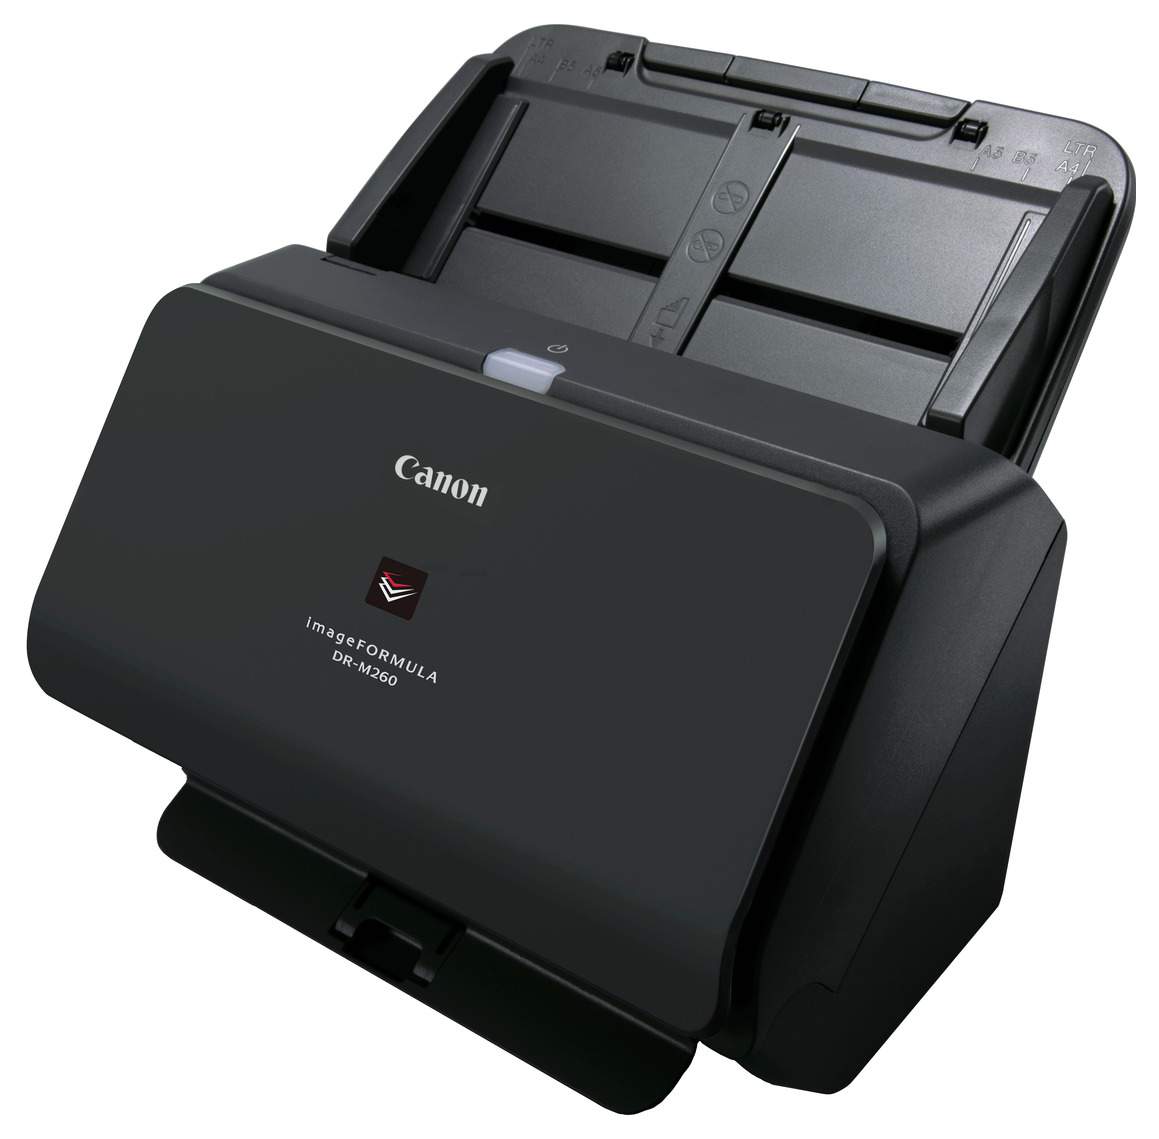 Сканер Canon ImageFormula DR-M260 Black